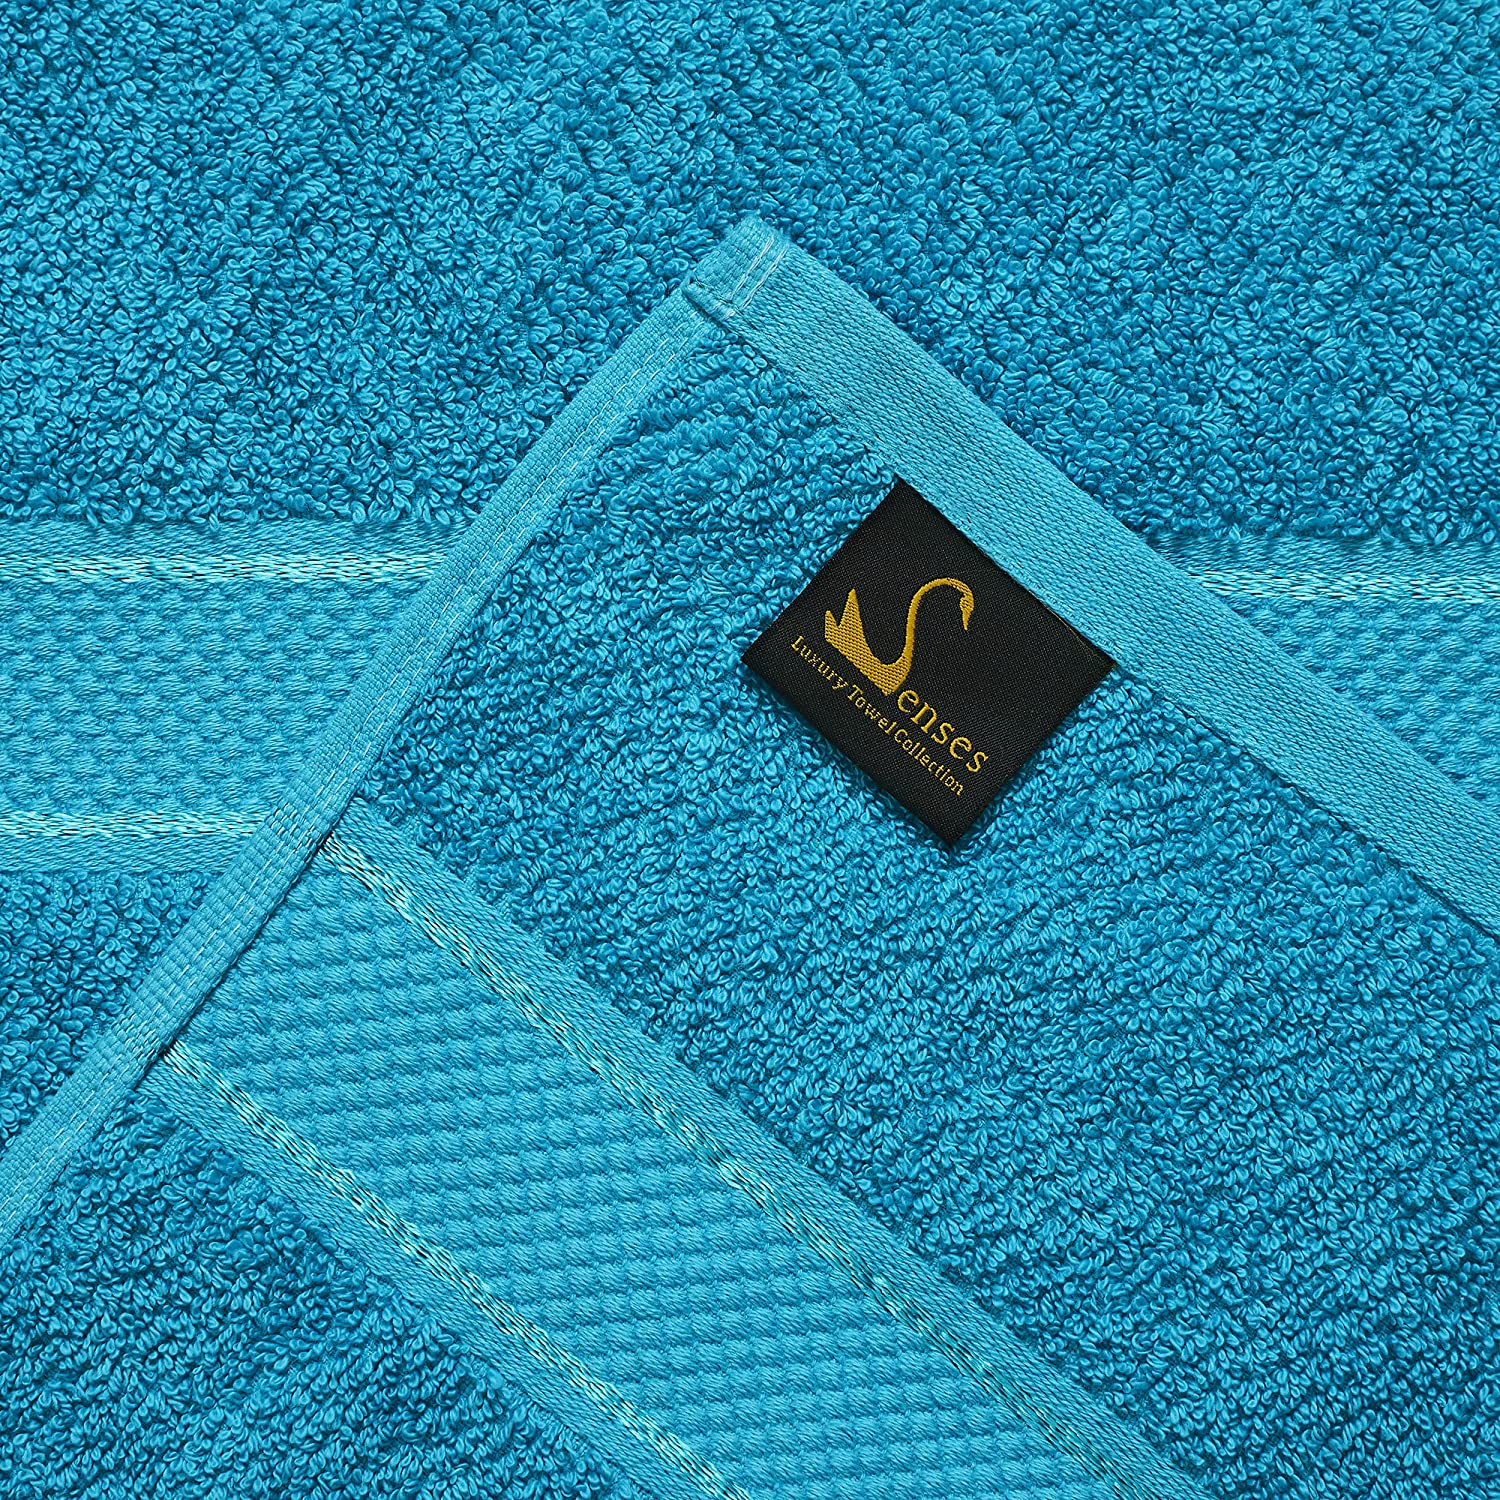 550 GSM 4 Piece Bath Towel Set(	Turquoise, White)